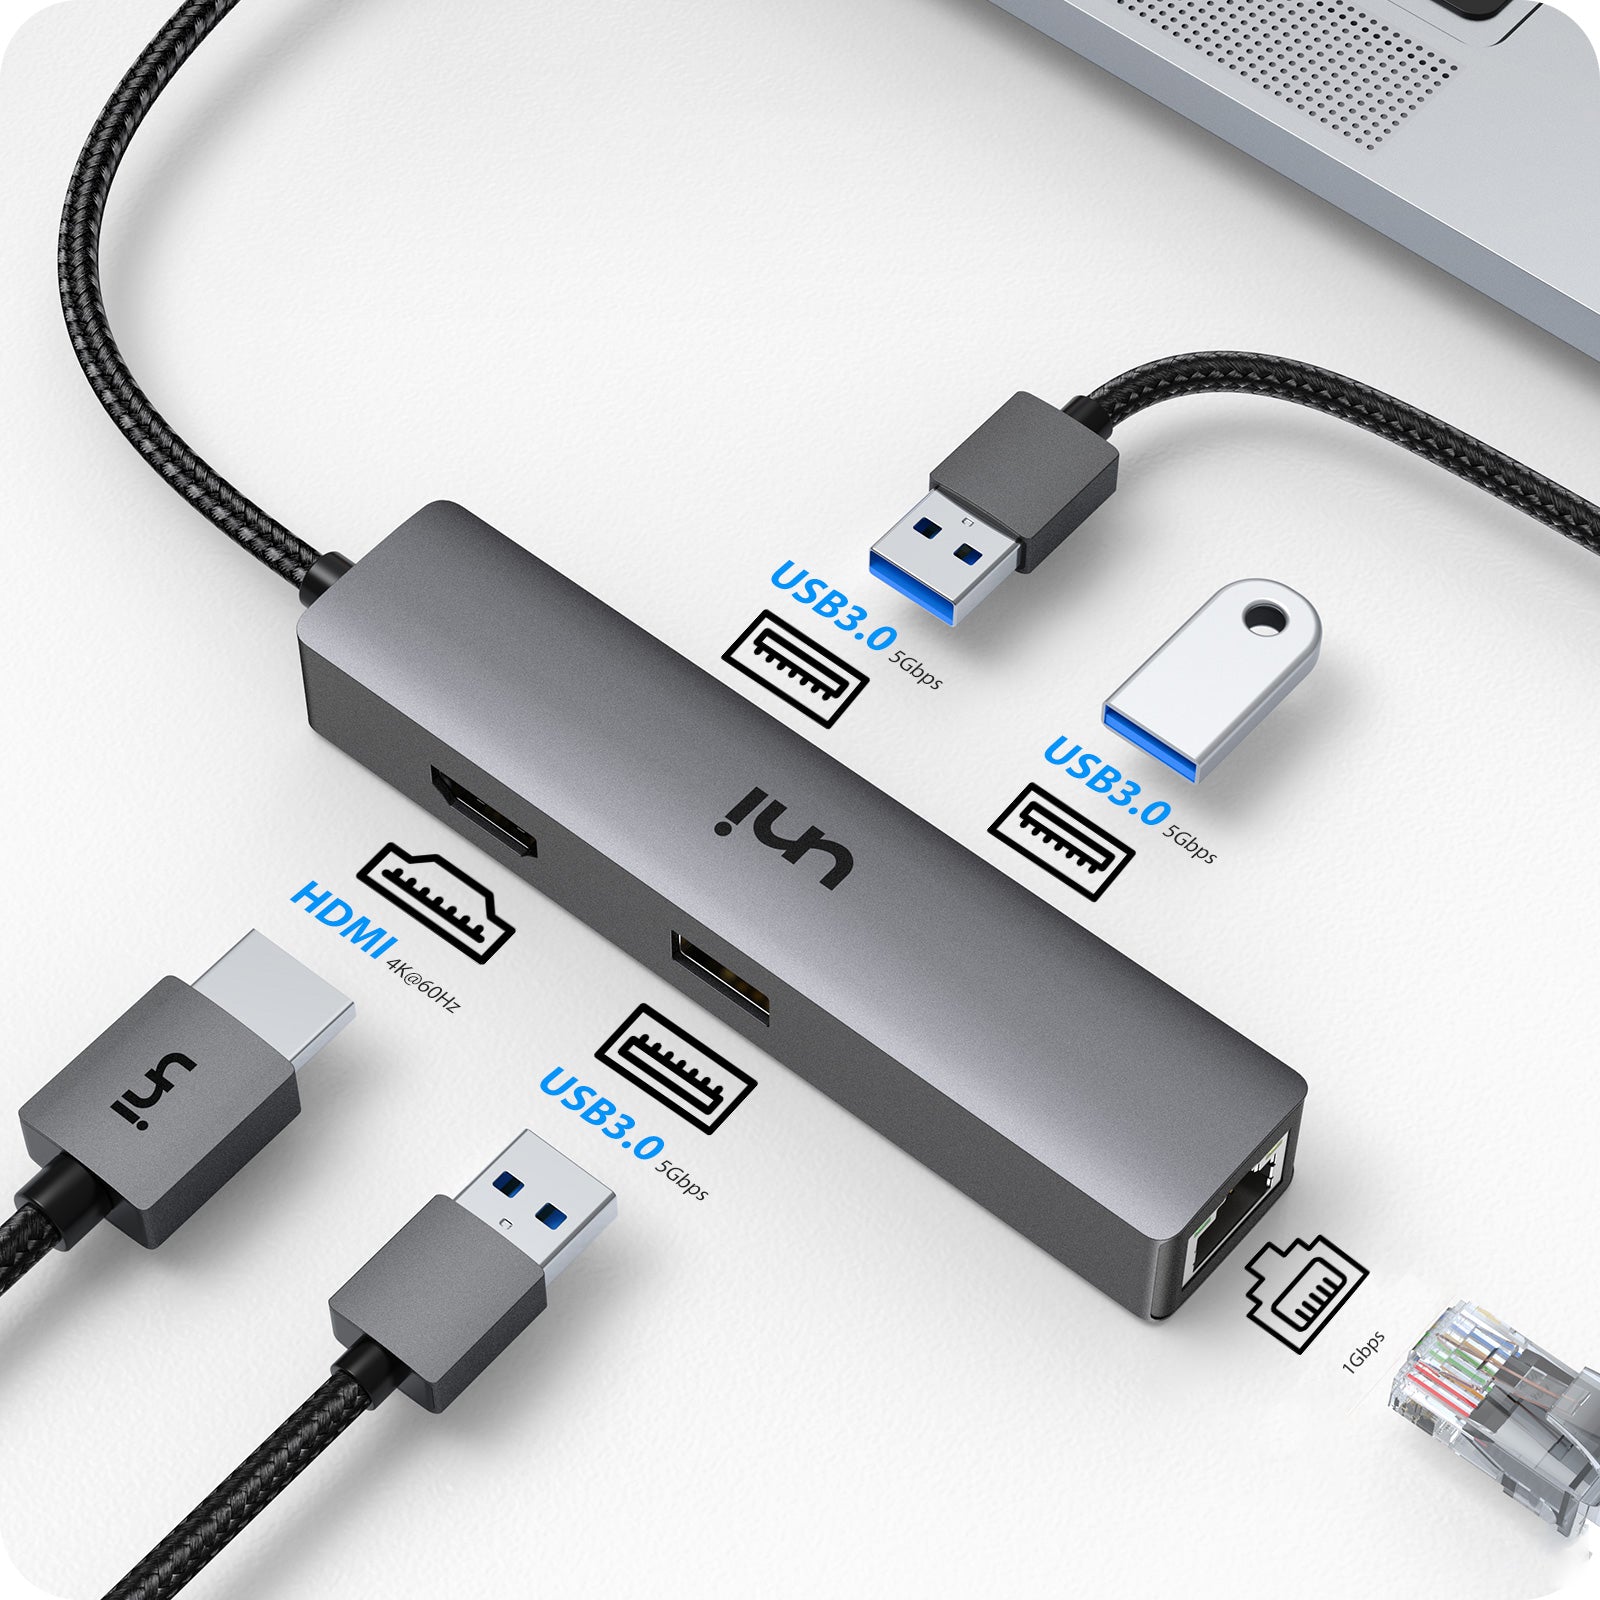 USB 3.0 x 2, HDMI 4K, USB 3.0, 1G Ethernet Adapter